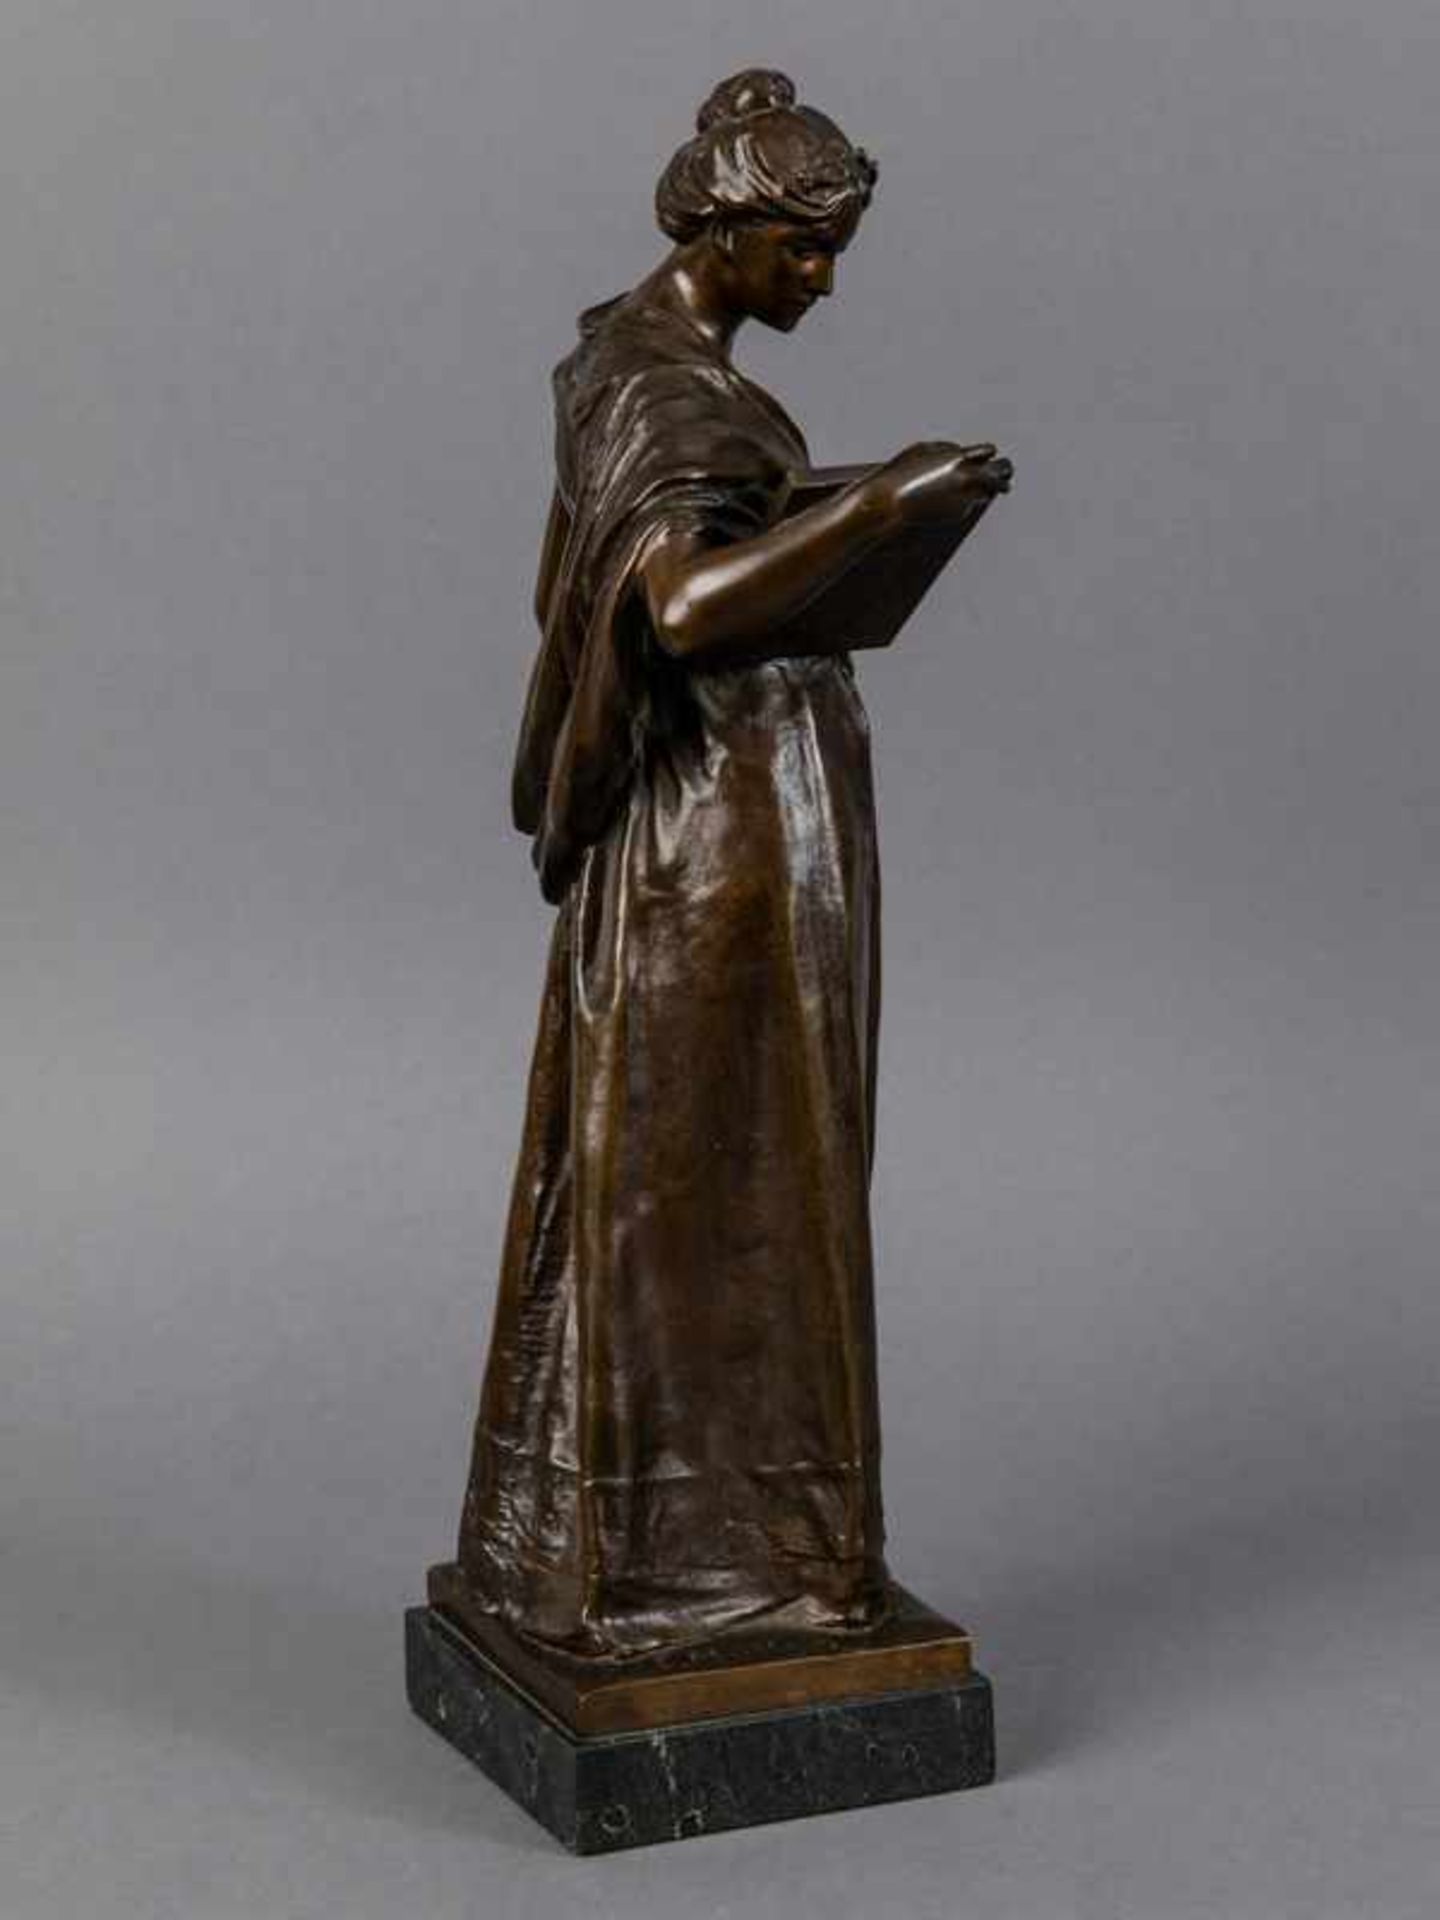 Figurenplastik "Stehende Frau mit Tafel", sign. "E. Müller", H. Noack, (Berlin-)Friedenau, um 1900. - Bild 7 aus 11